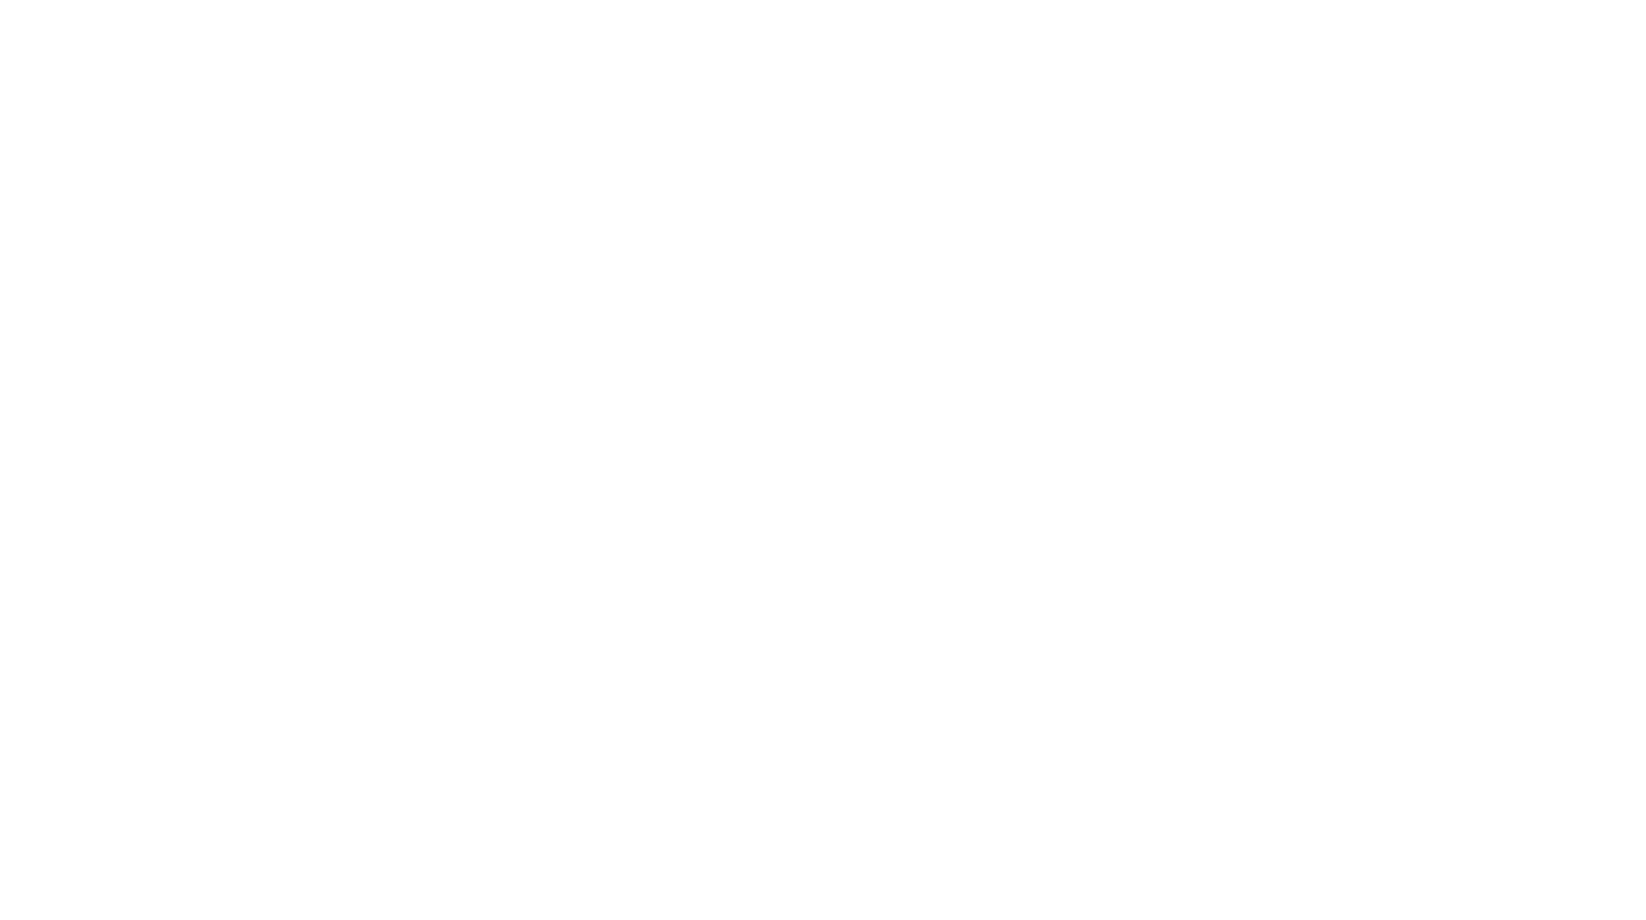 united way